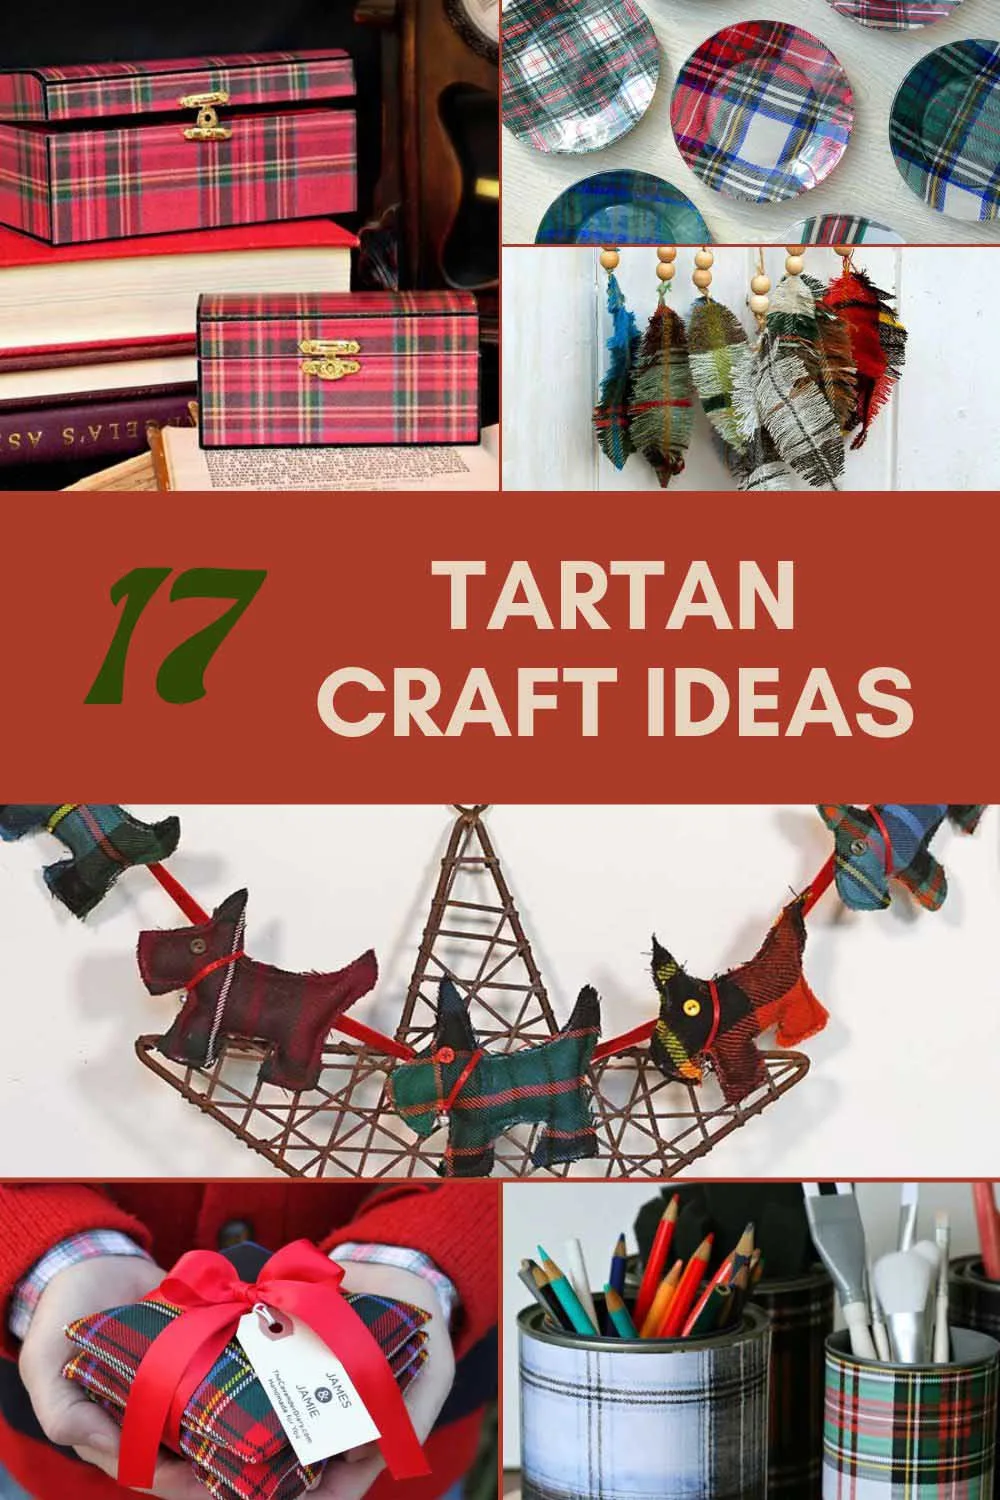 17 Fun Fabric Scraps Craft Projects 